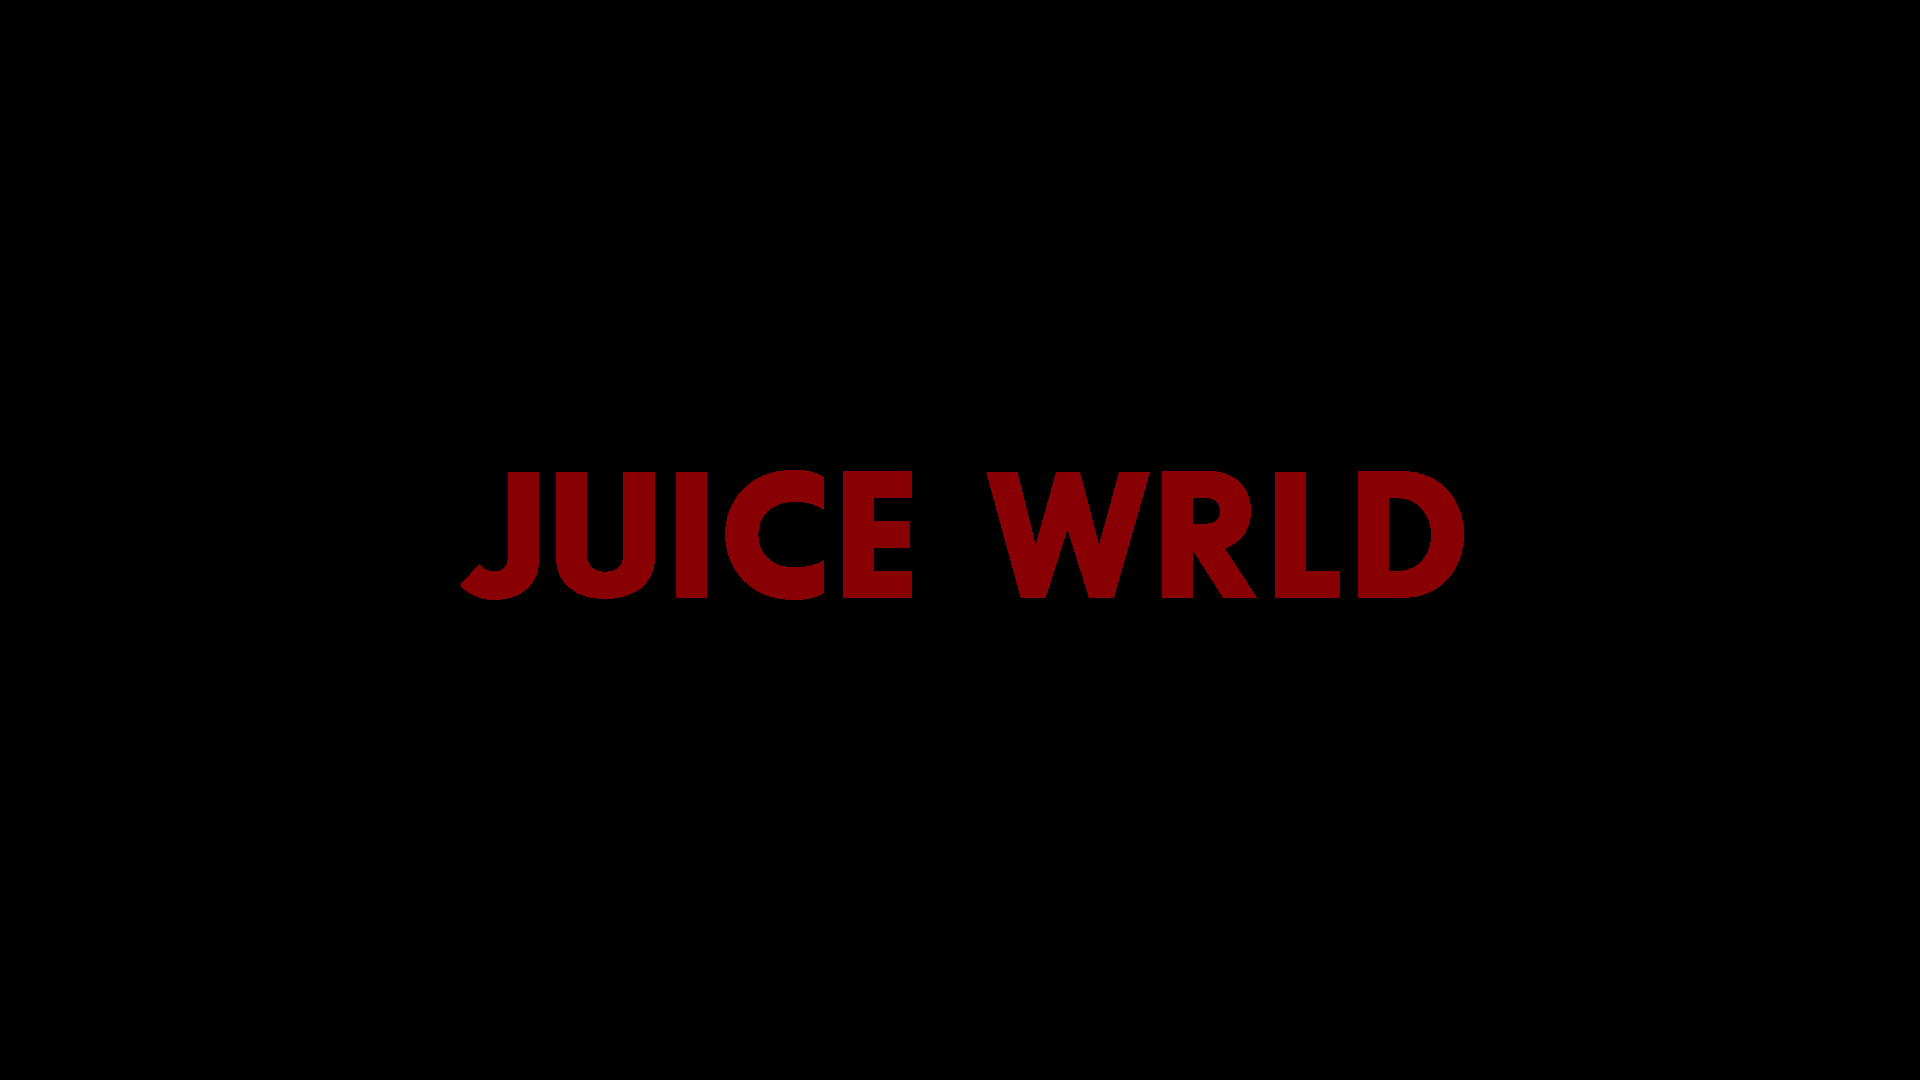 999 Computer Juice Wrld Wallpapers - Wallpaper Cave